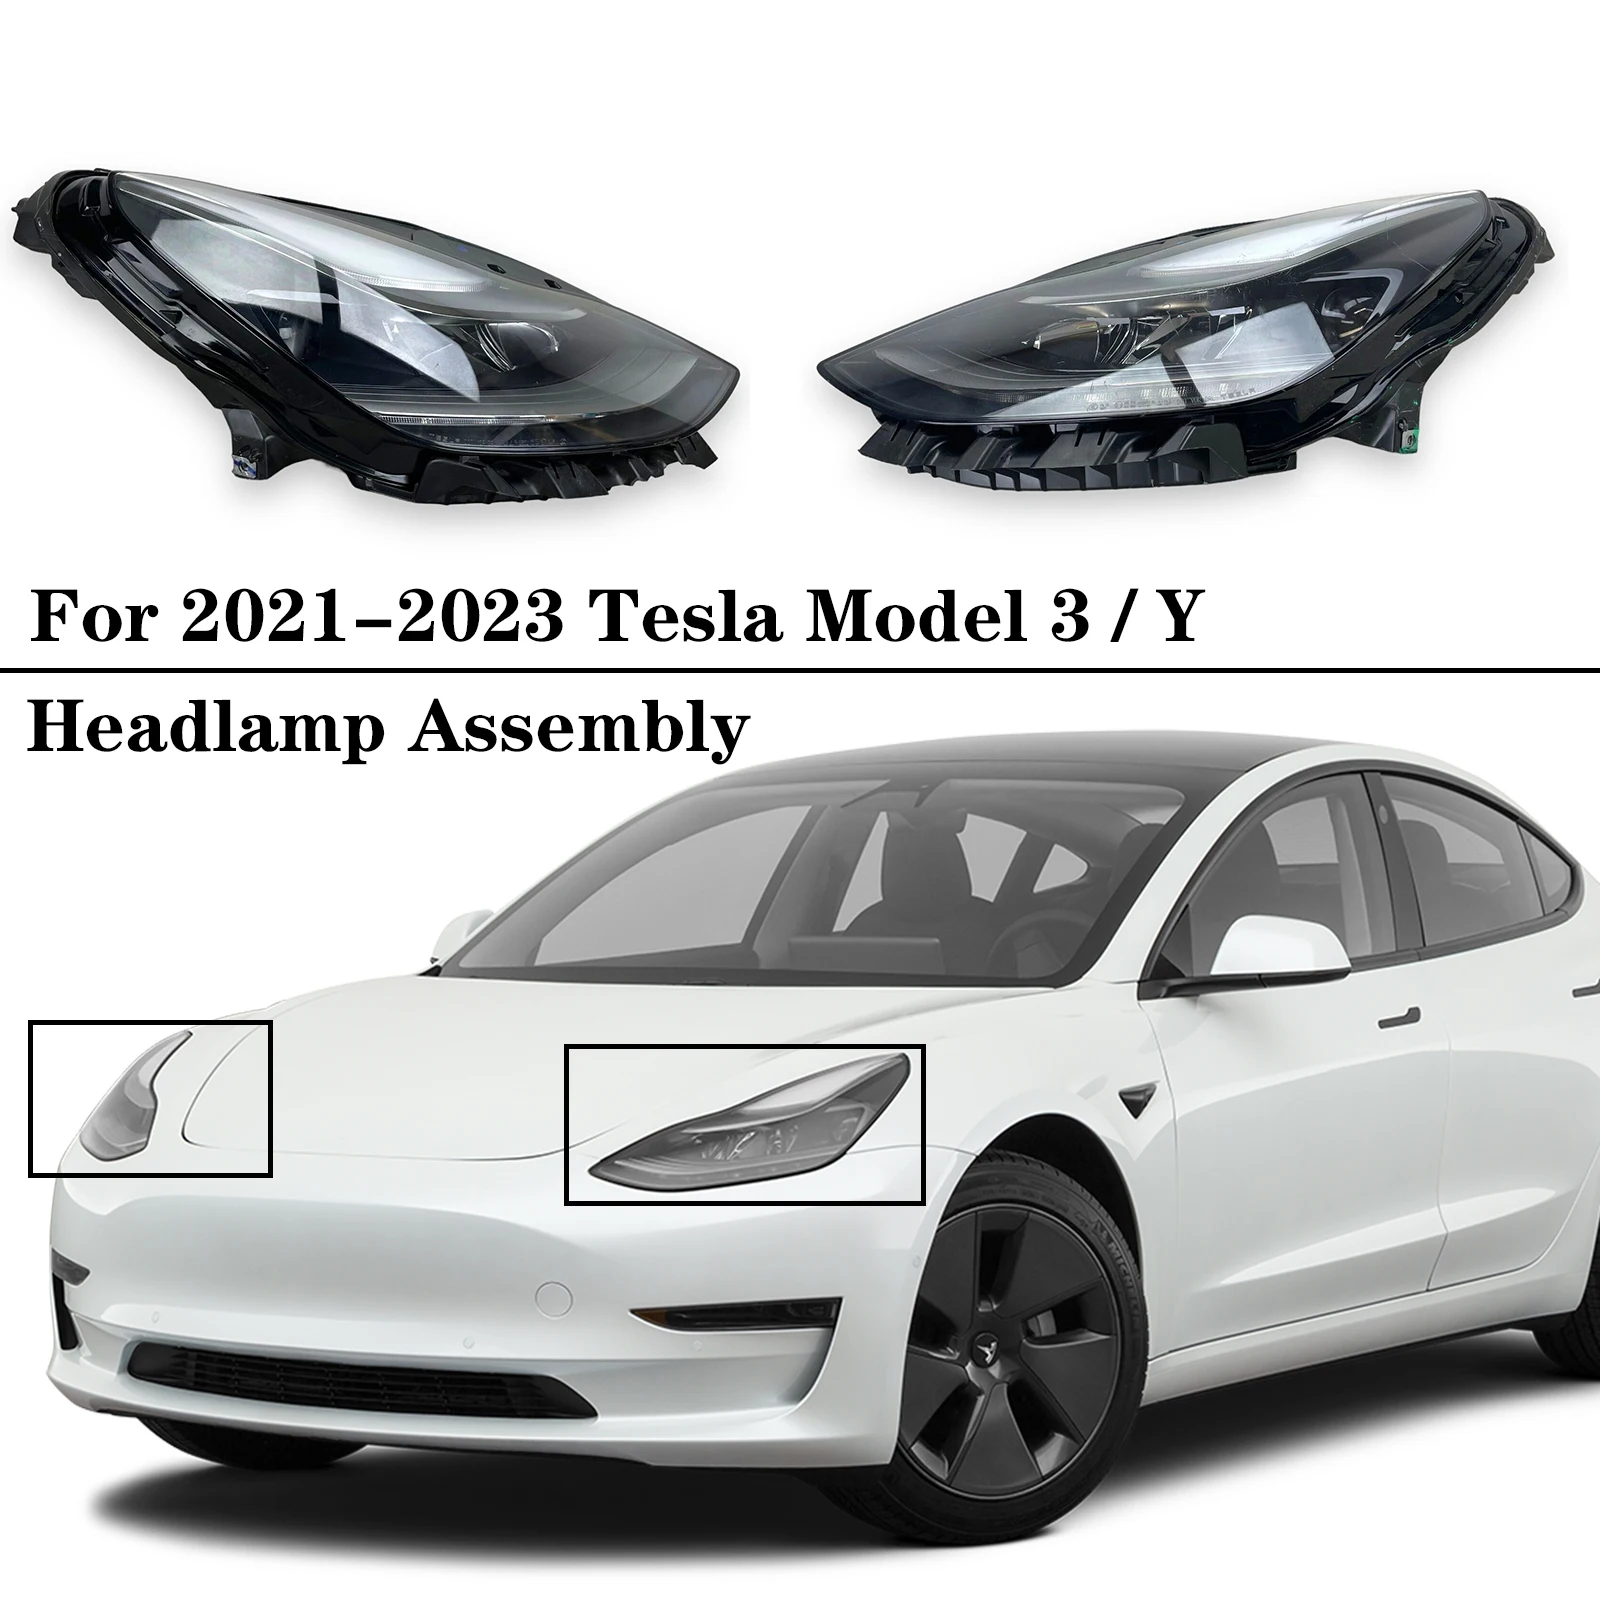 

New Car Headlamp Assembly For 2021-2023 Tesla Model 3/Y Headlight Front Lamp Headlamp LH 1514952-00-C RH 1514953-00-C